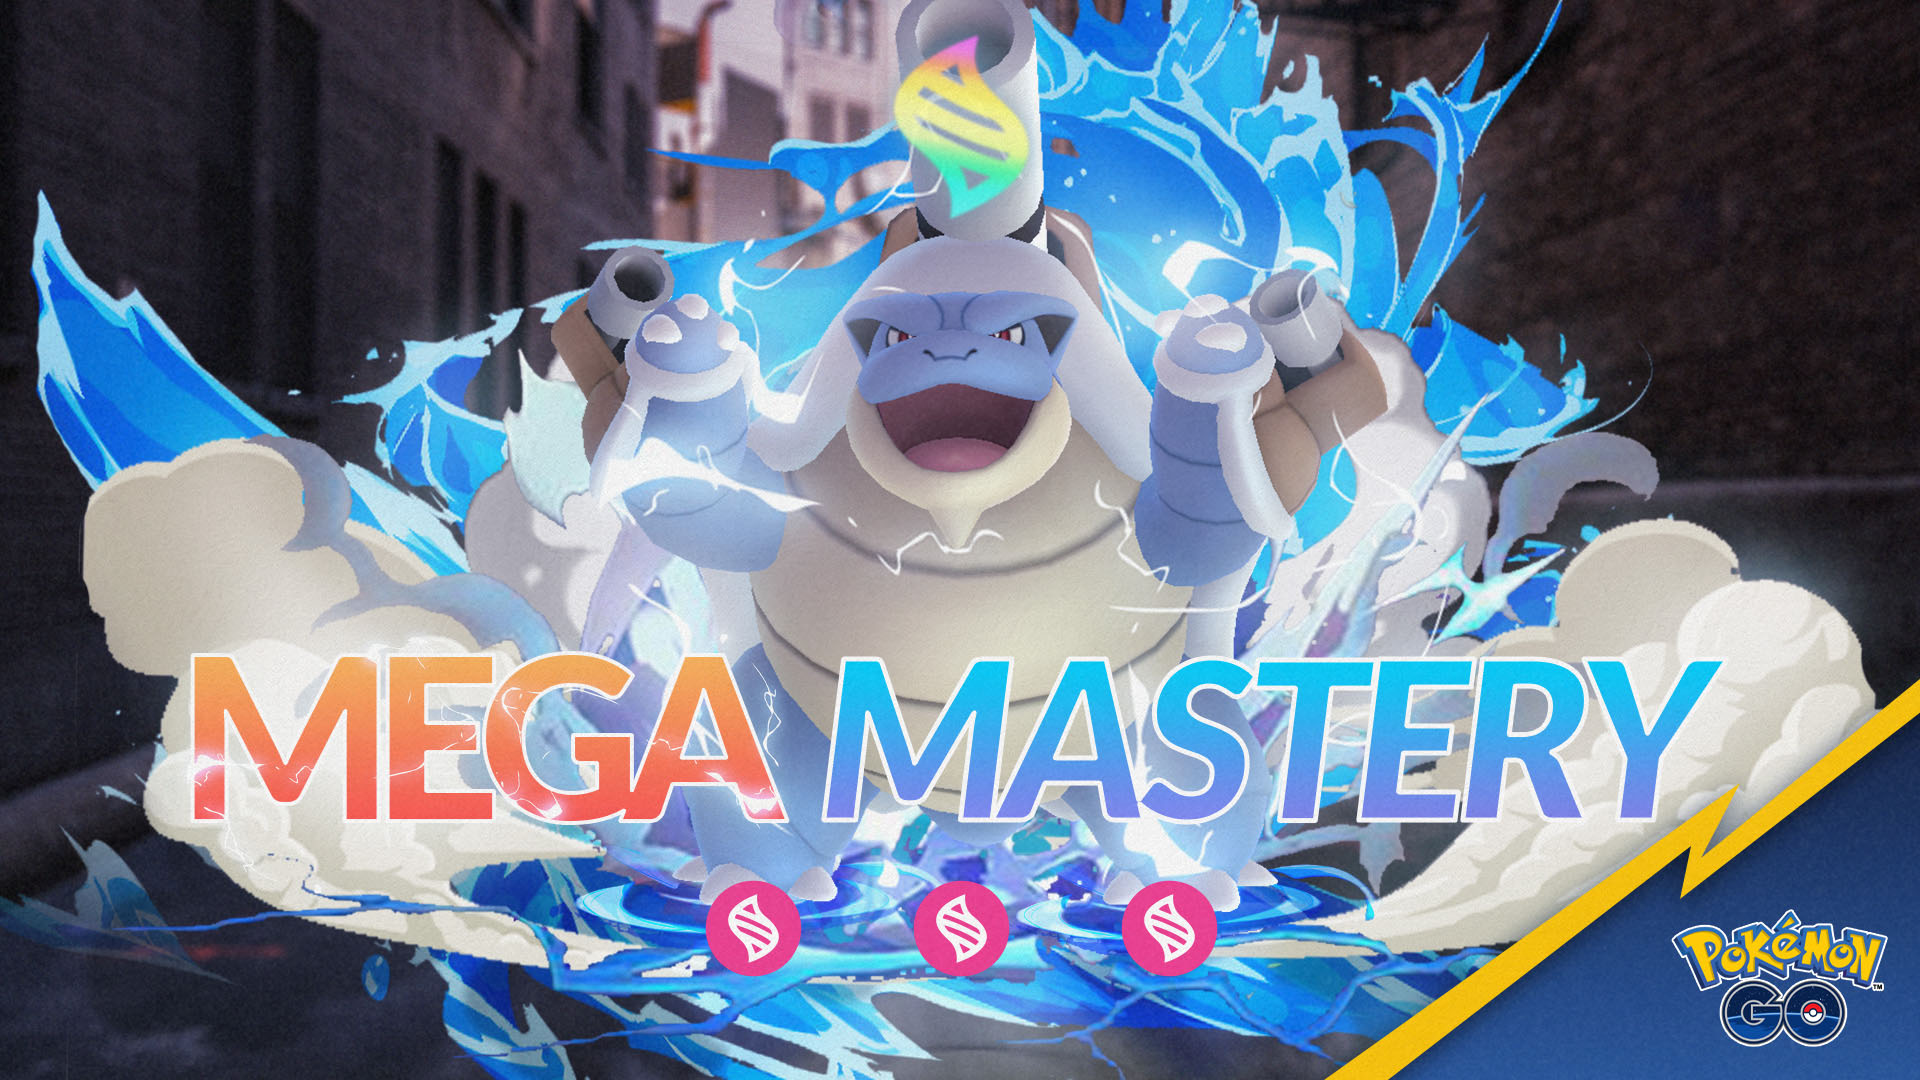 Pokemon Go Mega Evolutions: Everything you need to know about Mega Raids  and Mega Energy